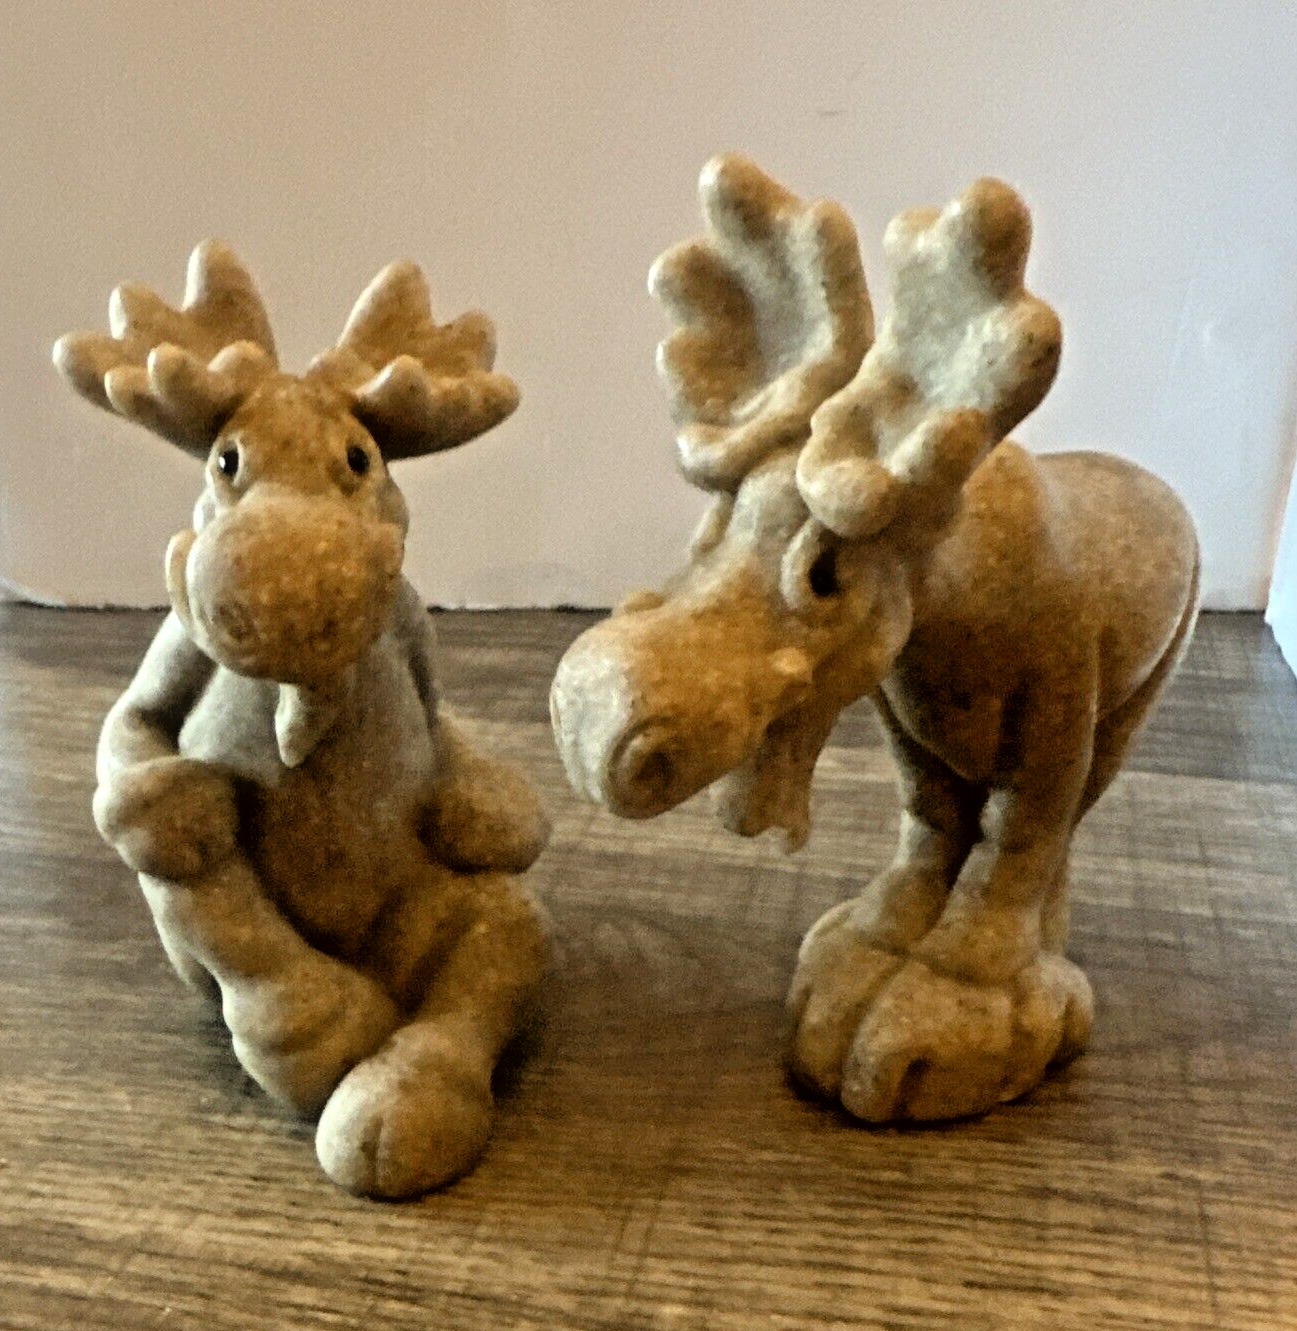 Quarry Critters Mimi & Misty Moose Figurines Pair 4”